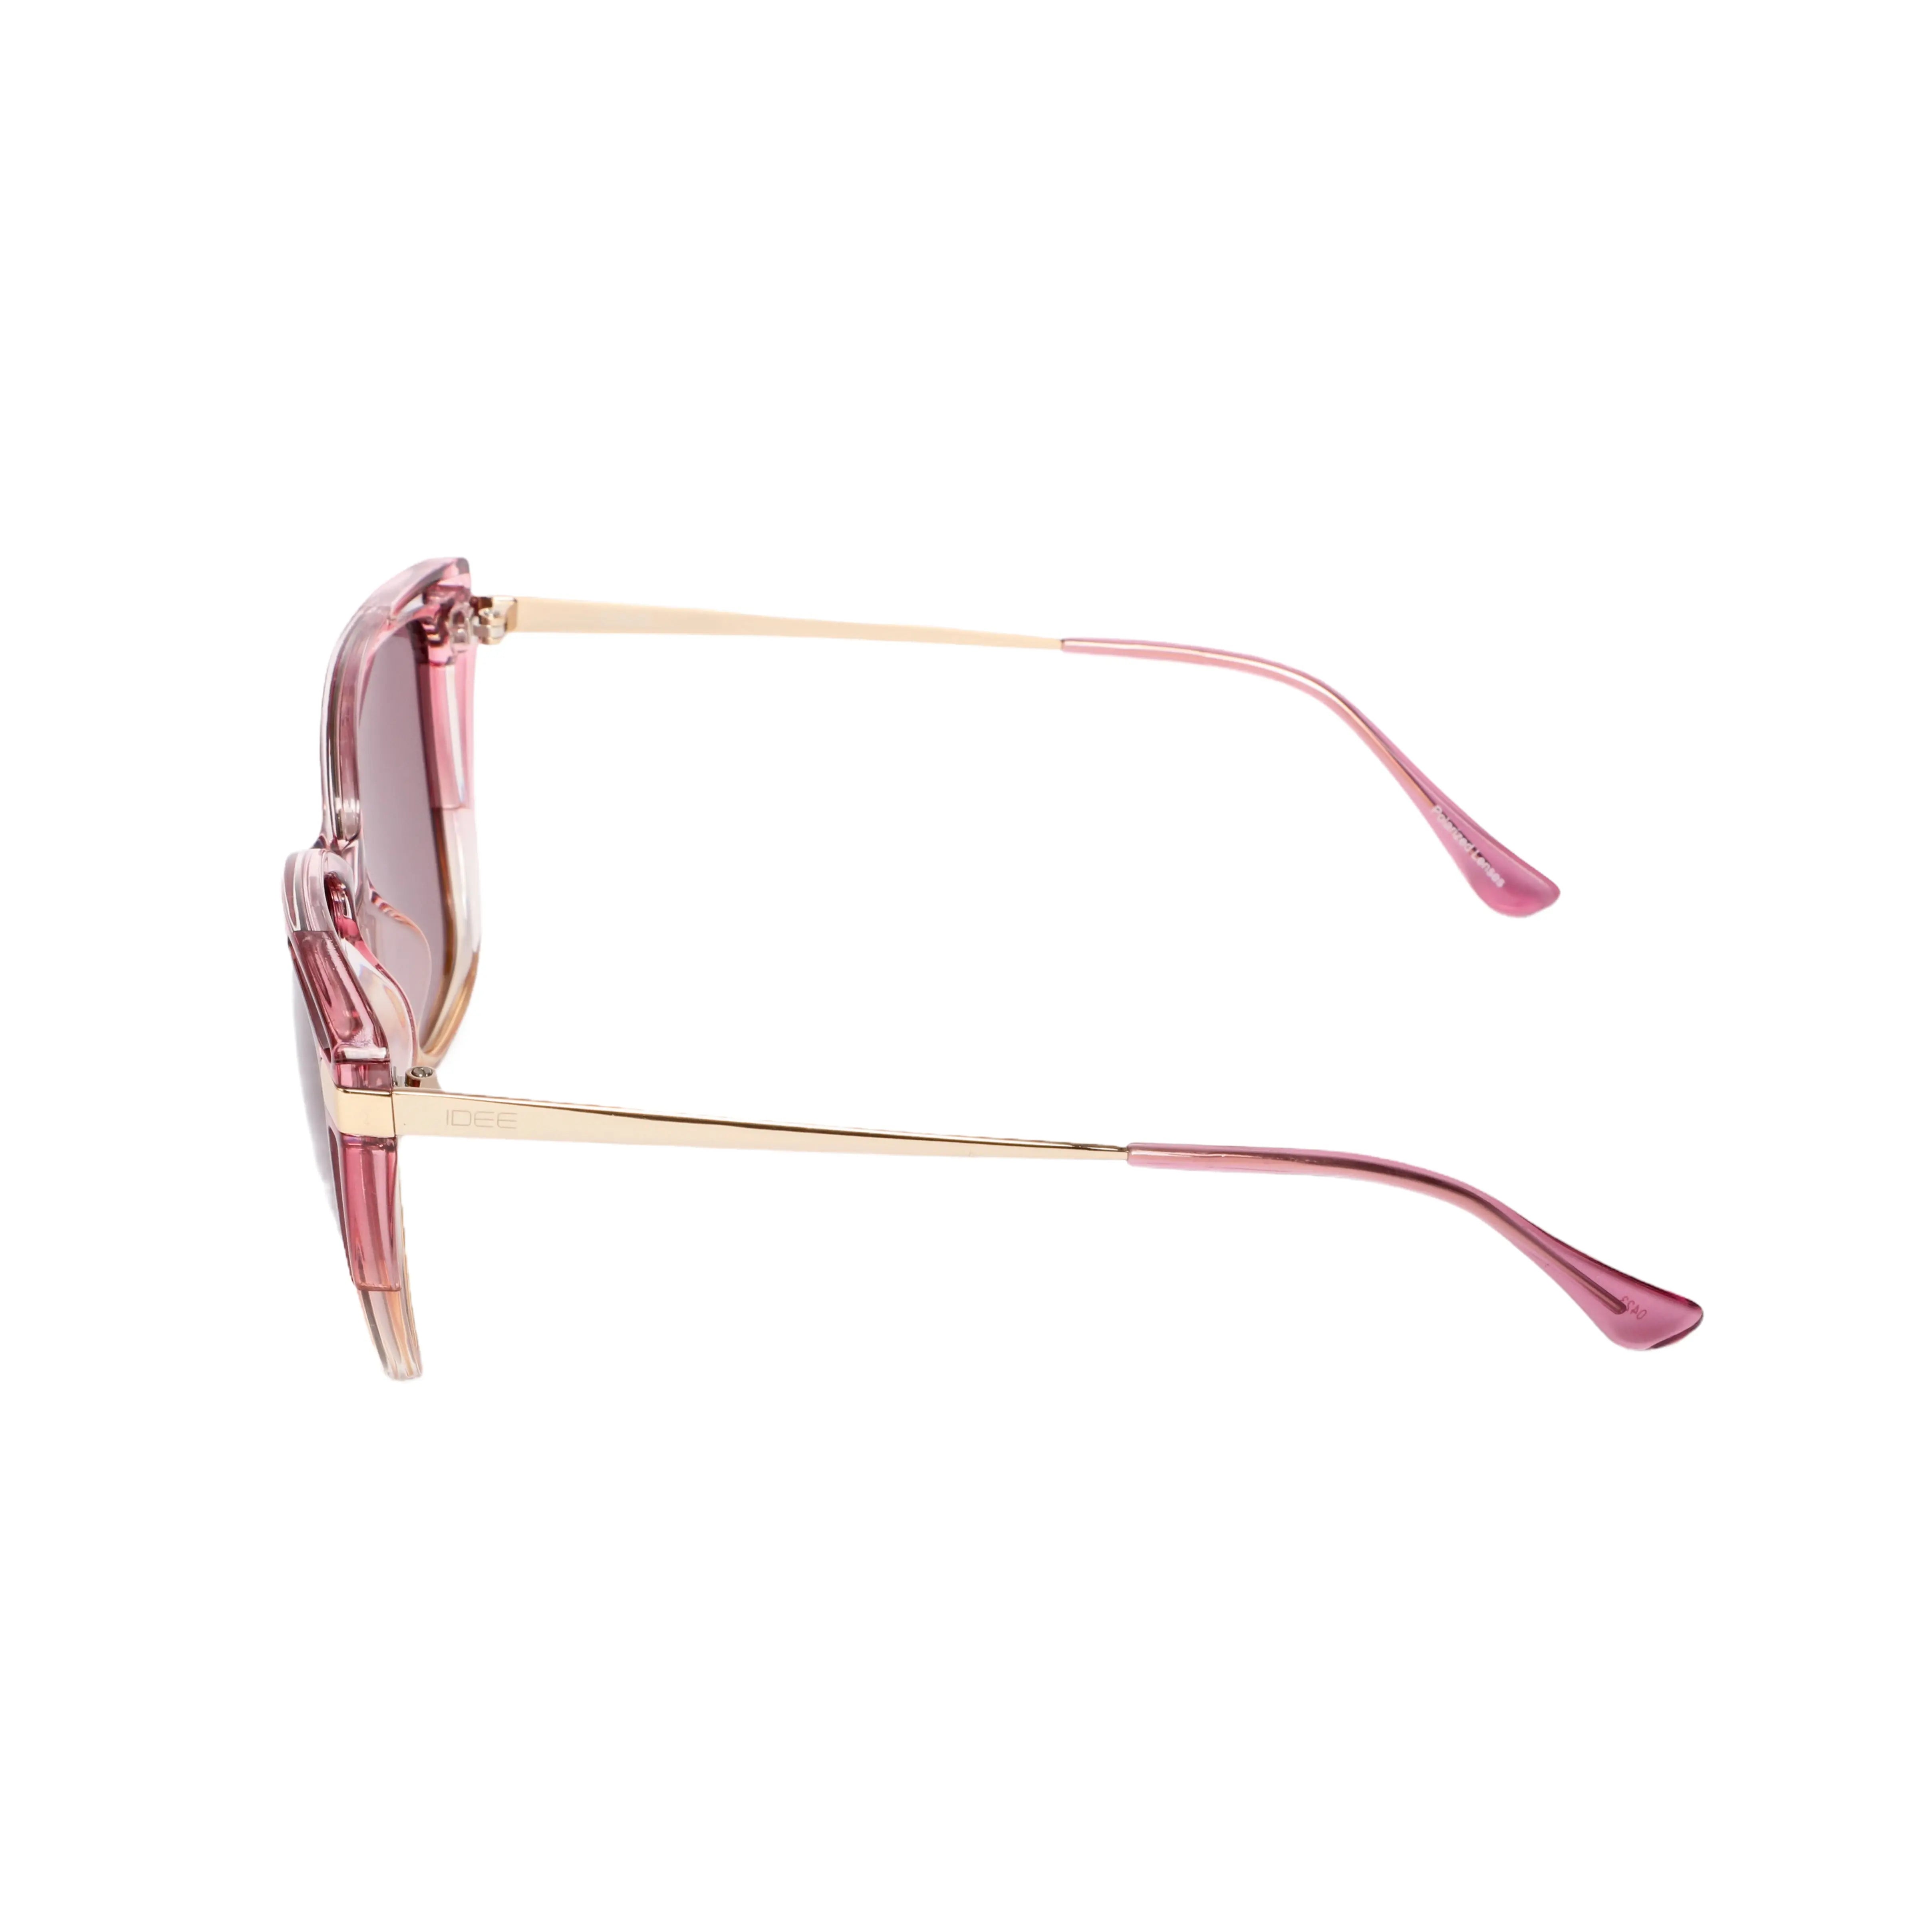 IDEE-S3016--C4 Sunglasses - Premium Sunglasses from IDEE - Just Rs. 3740! Shop now at Laxmi Opticians